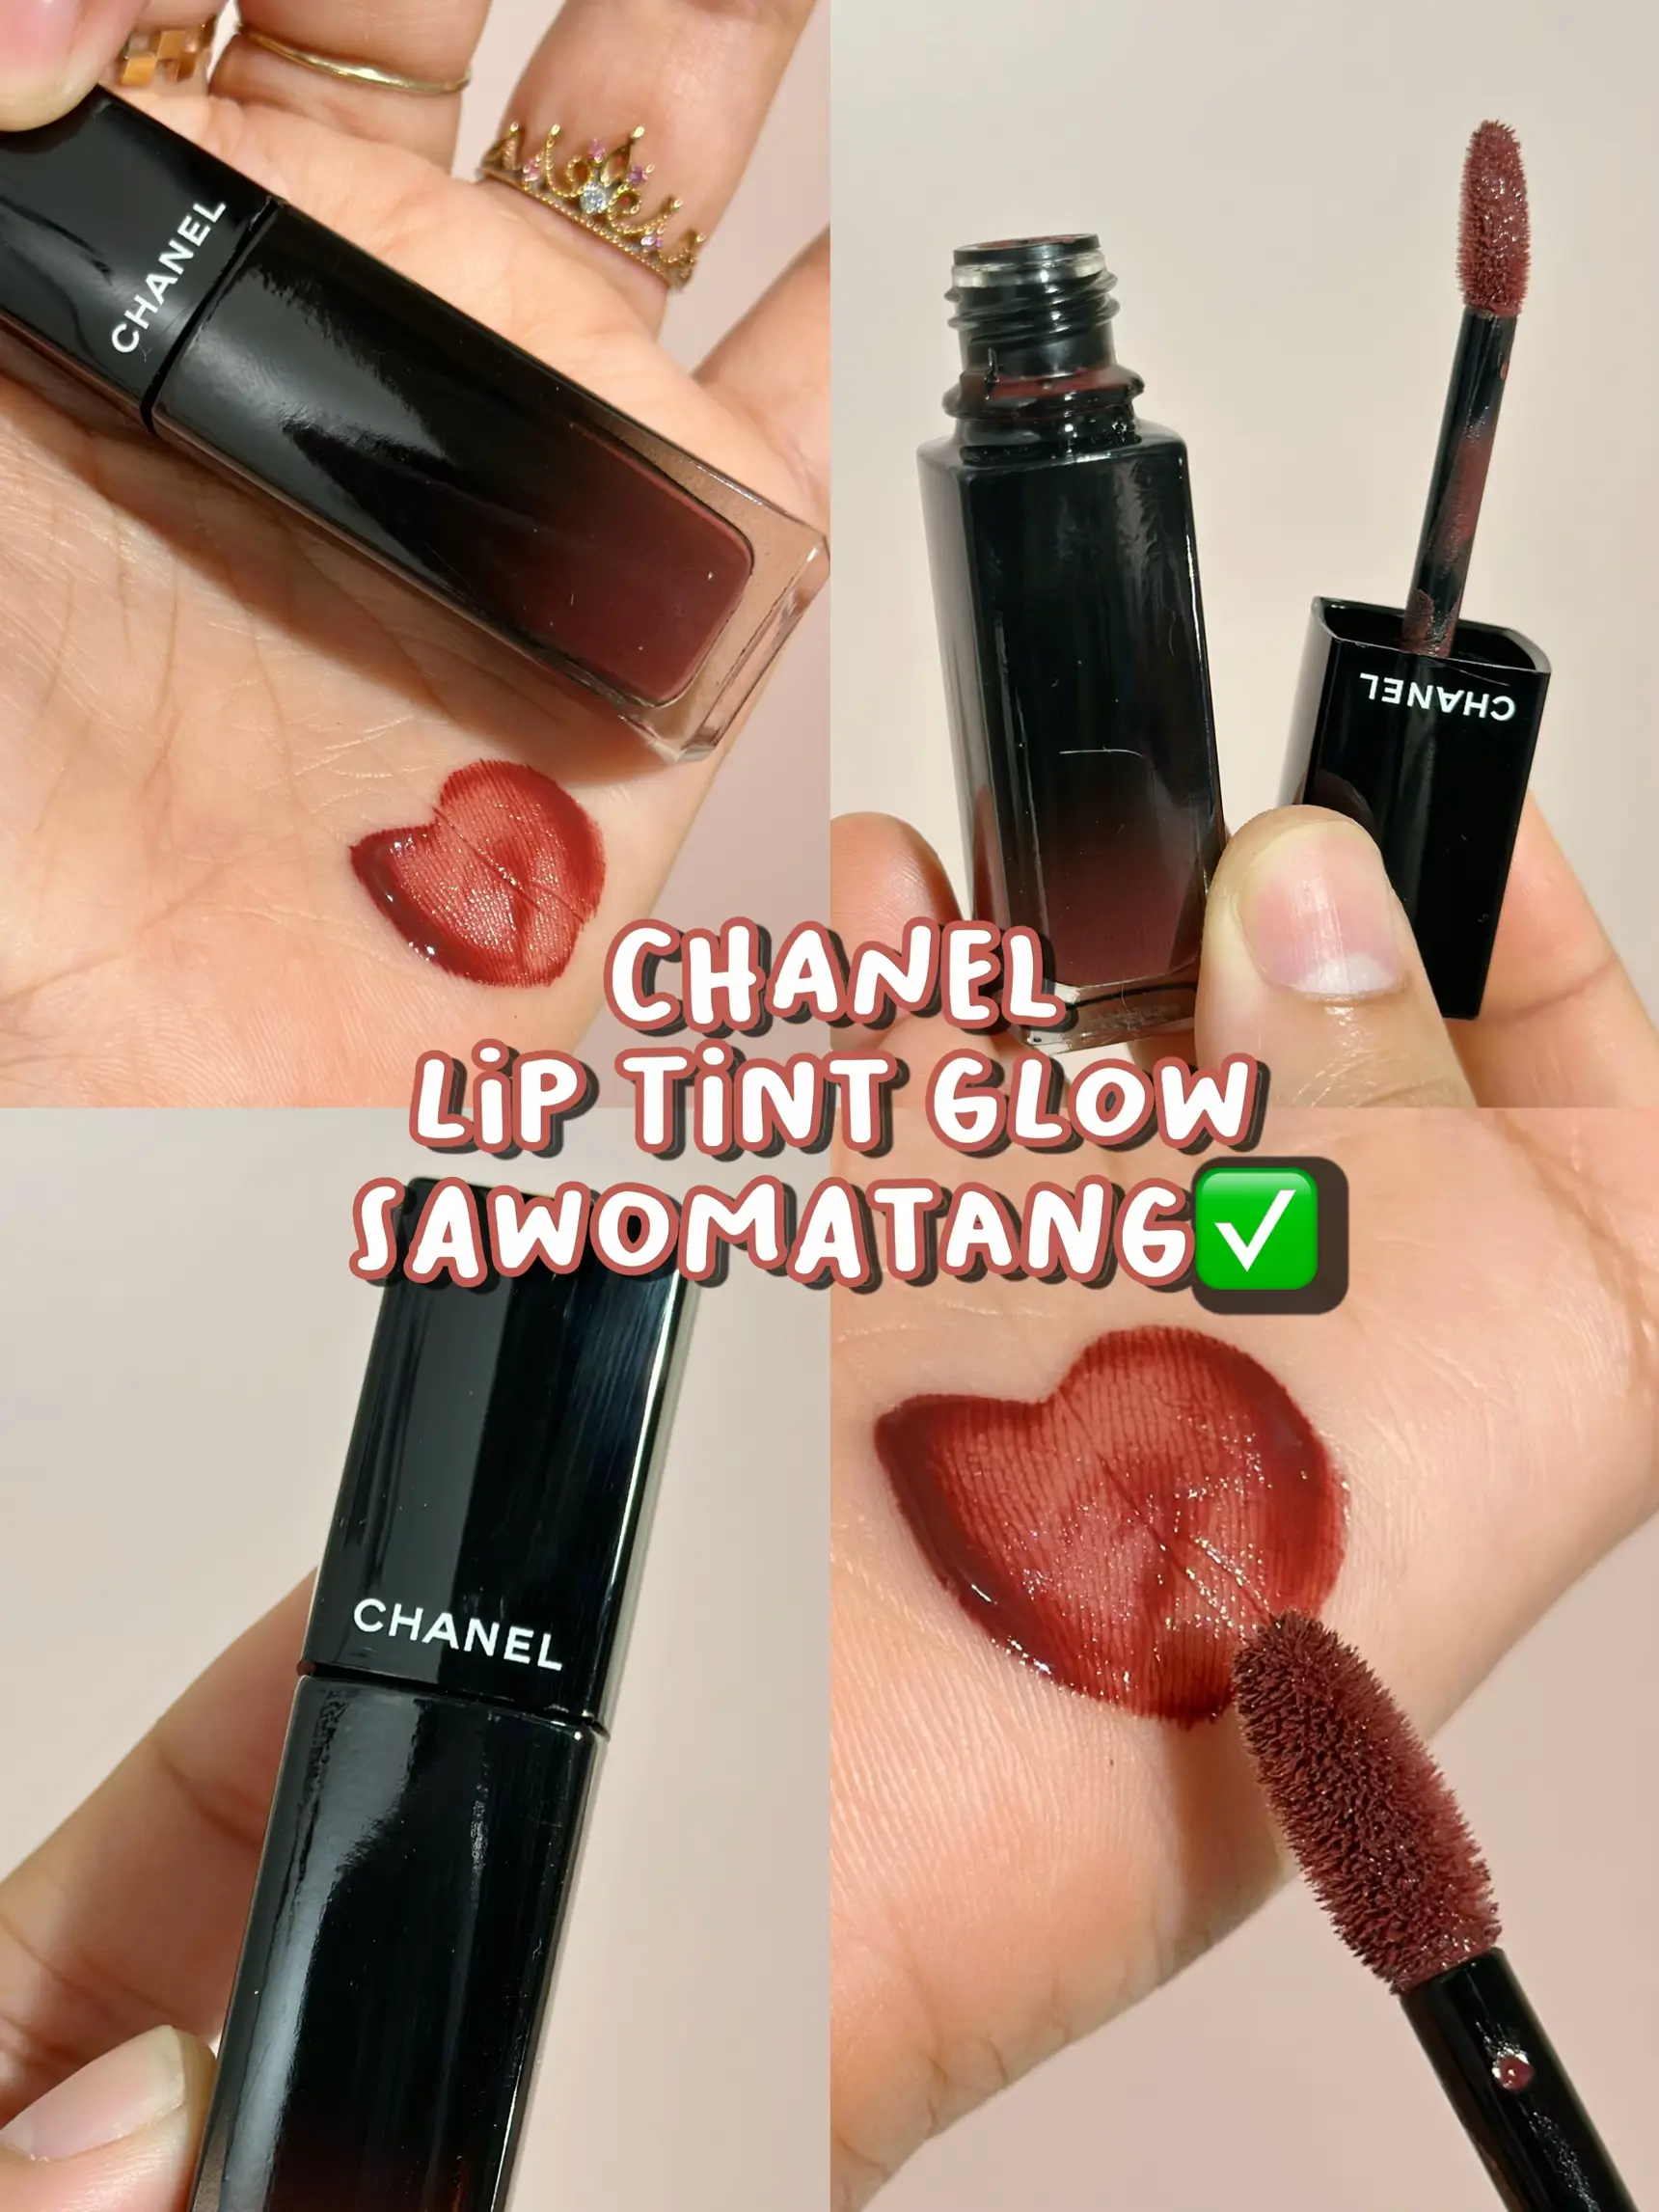 Chanel lip tint for sawo matang✨, Video published by Natasyar ☾